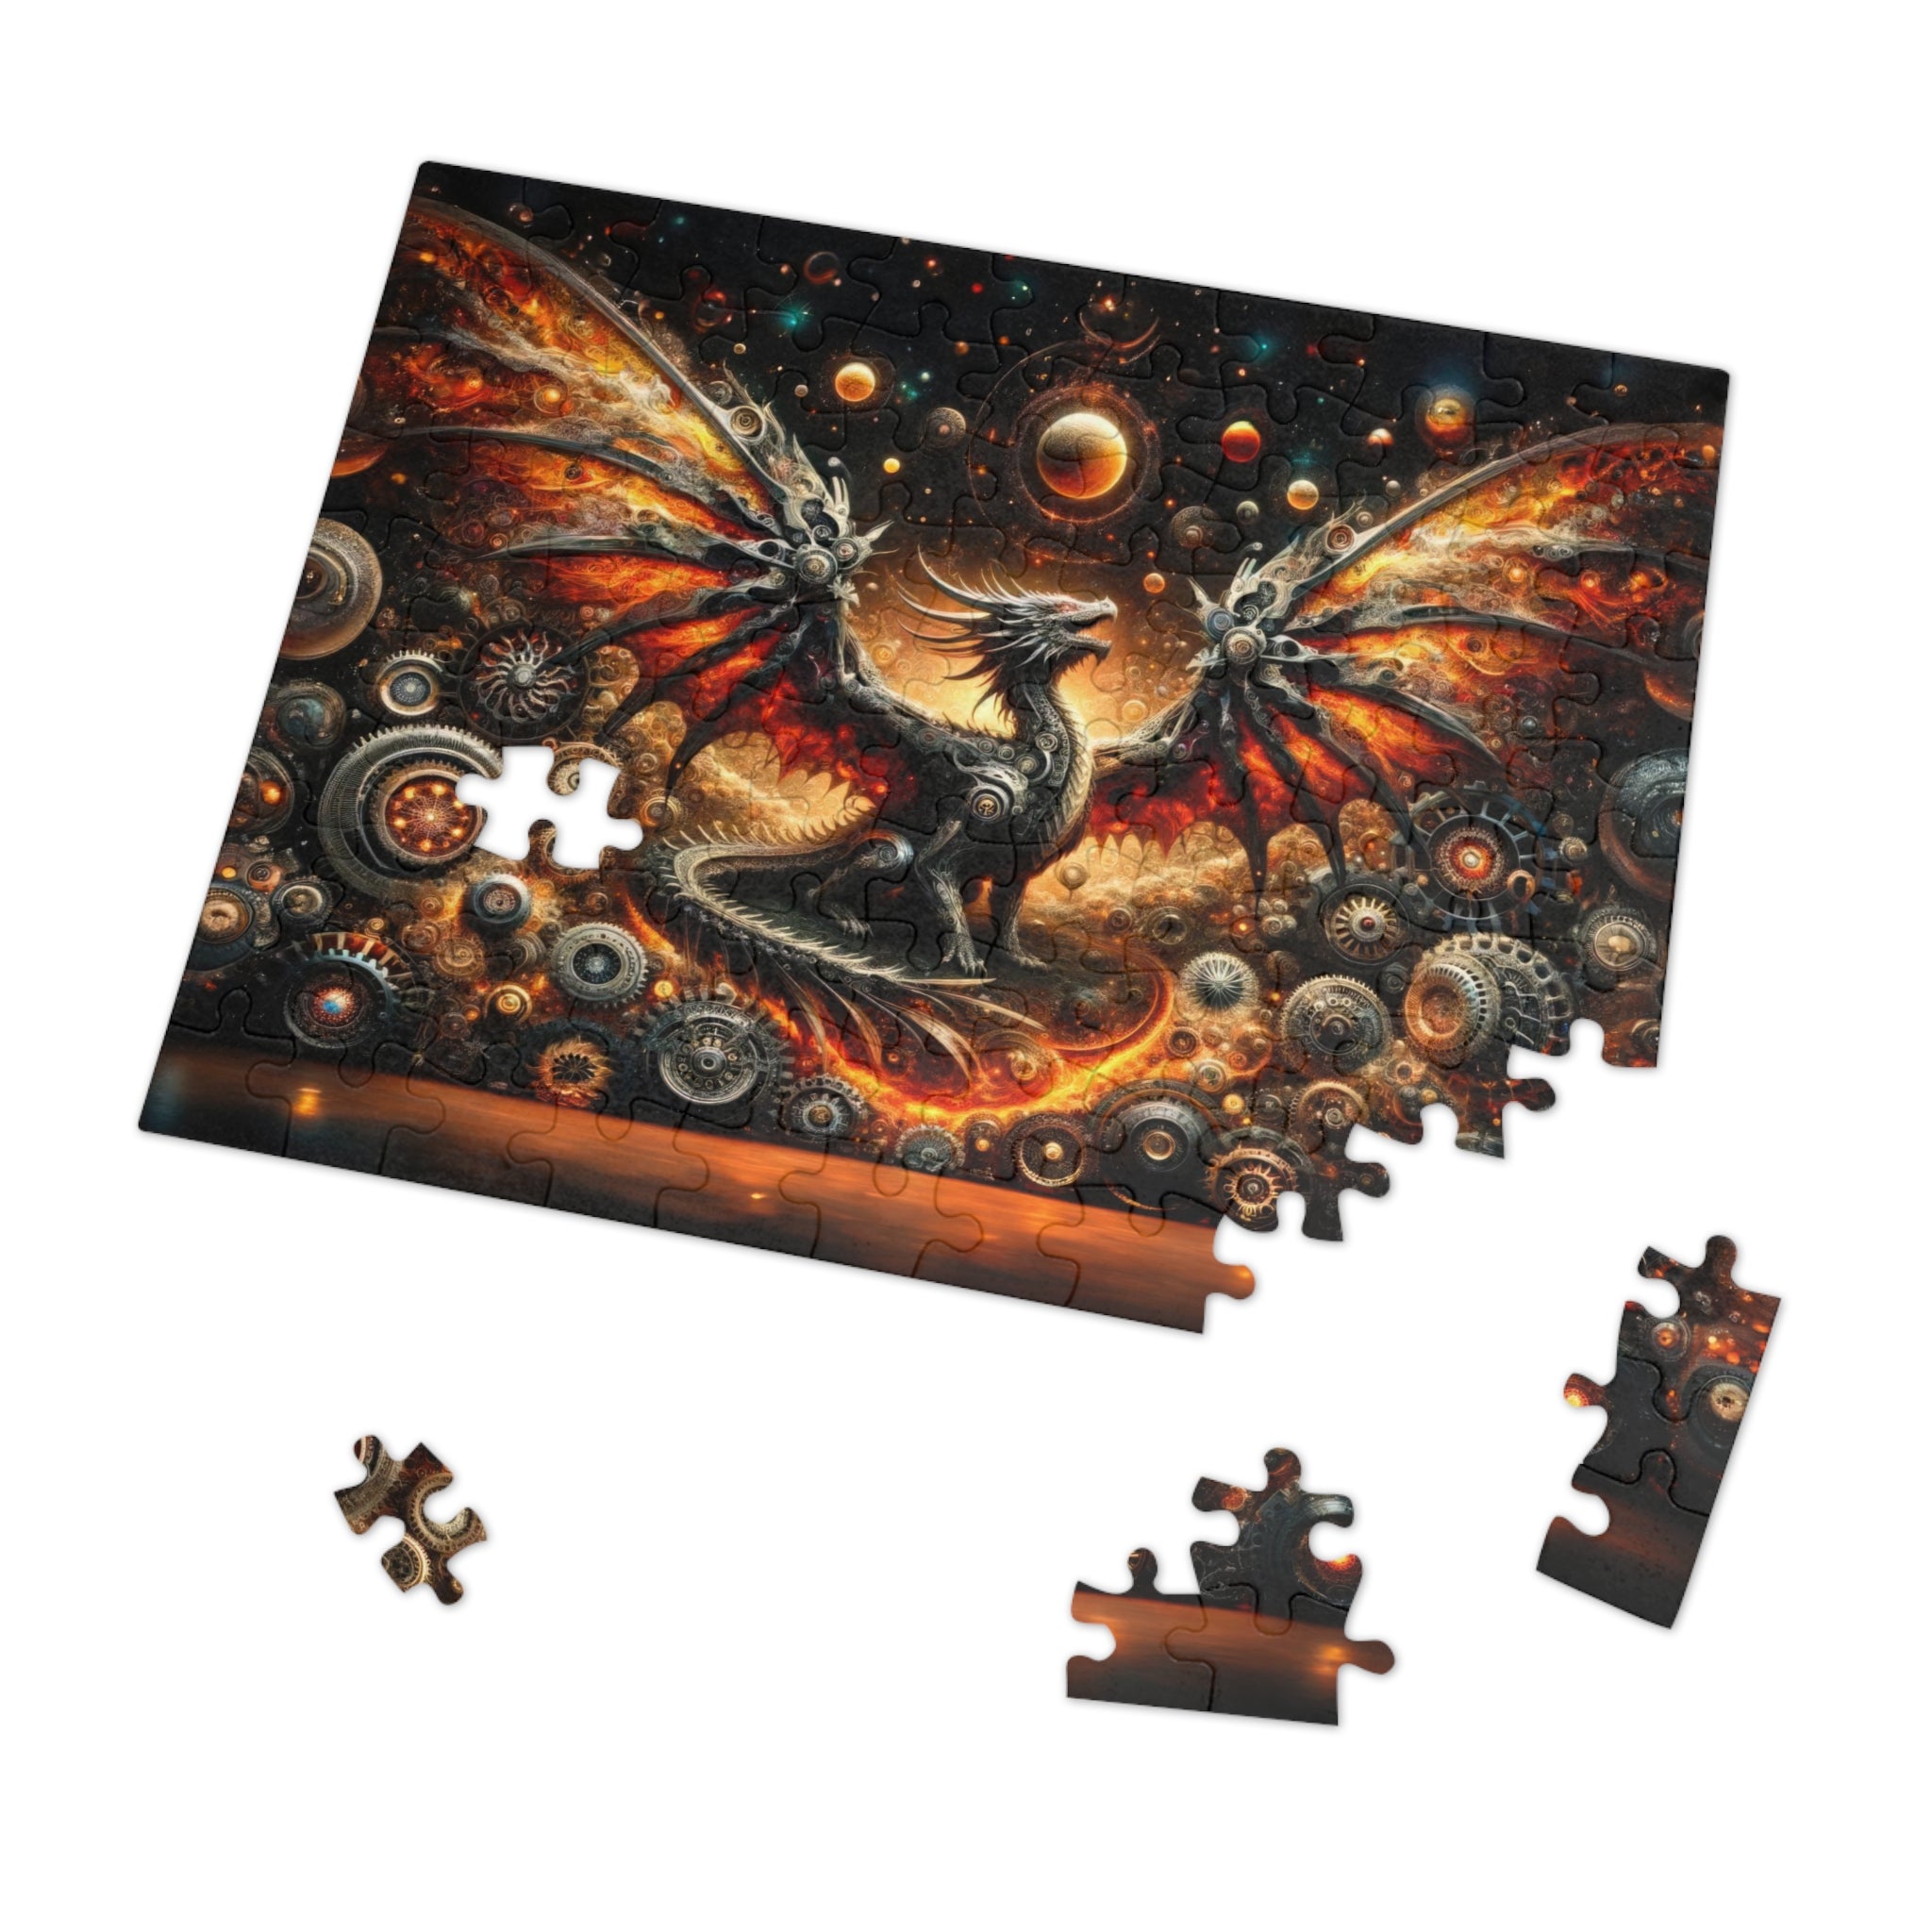 The Automaton Dragon Jigsaw Puzzle